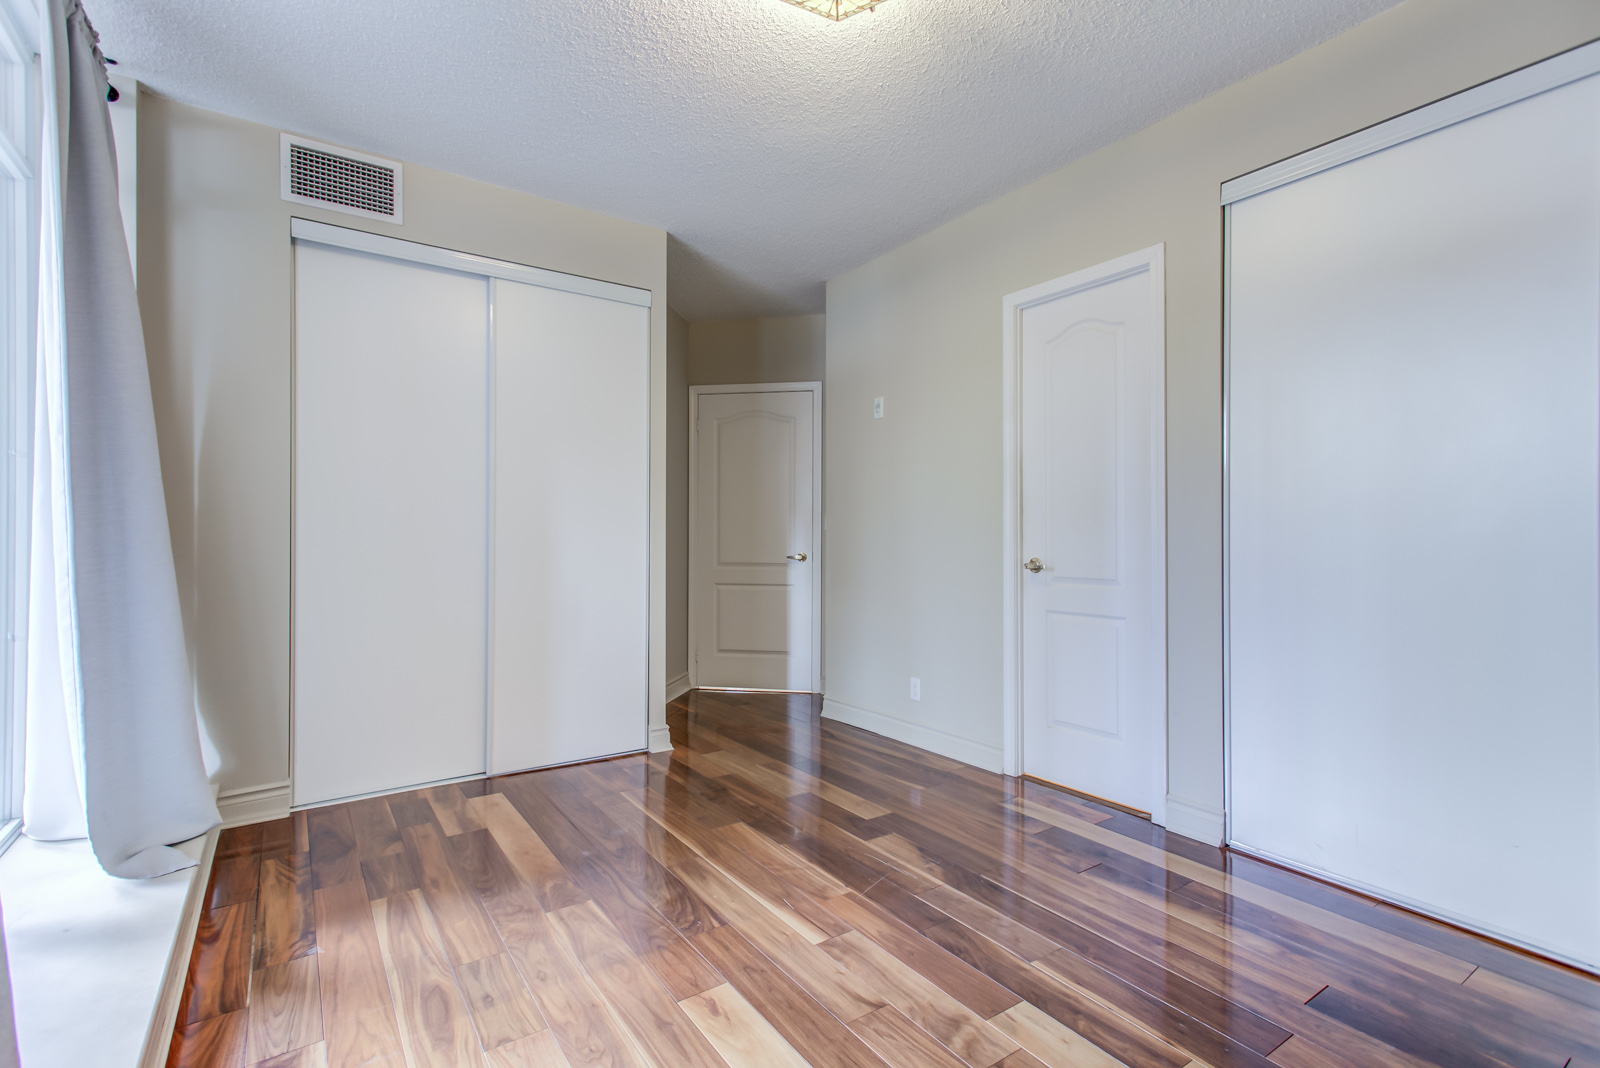 Empty master bedroom with dark and shiny hardwood floors, gray walls, and multiple doors.